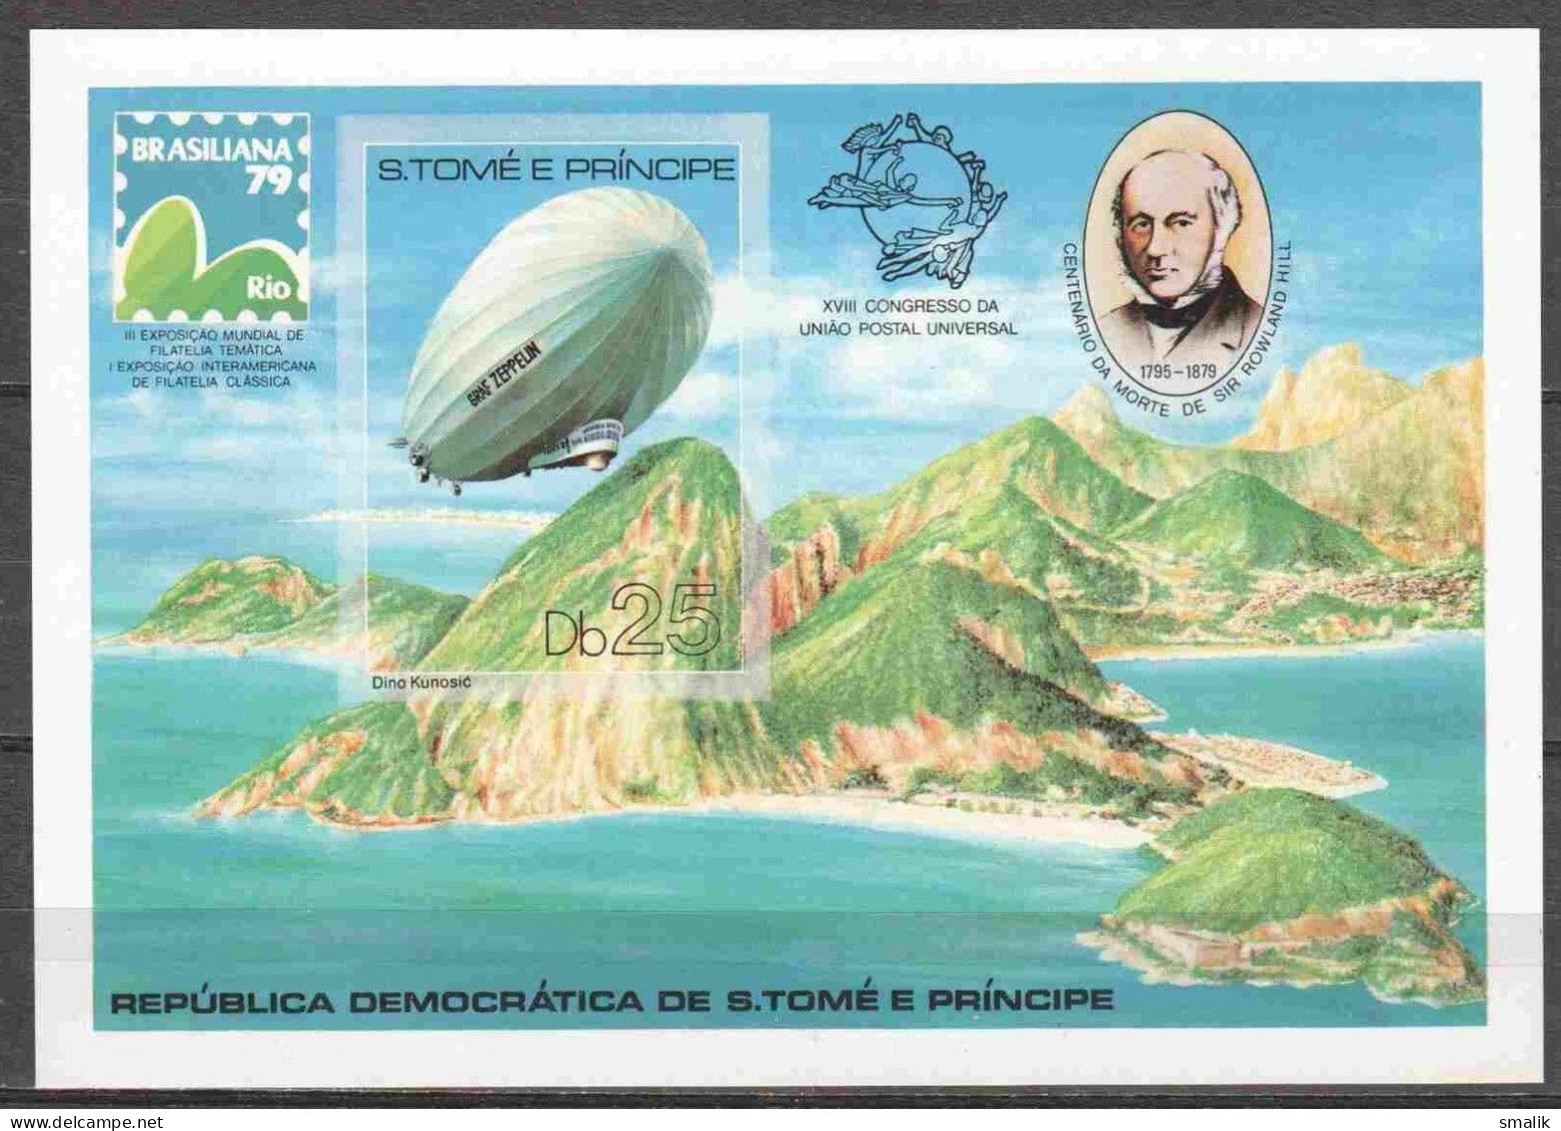 S. TOME E PRINCIPE SAO 1979 - Rowland Hill UPU, Depicting Graf Zeppelin Braziliana'79, IMPERF Miniature Sheet, MNH - Sao Tome Et Principe